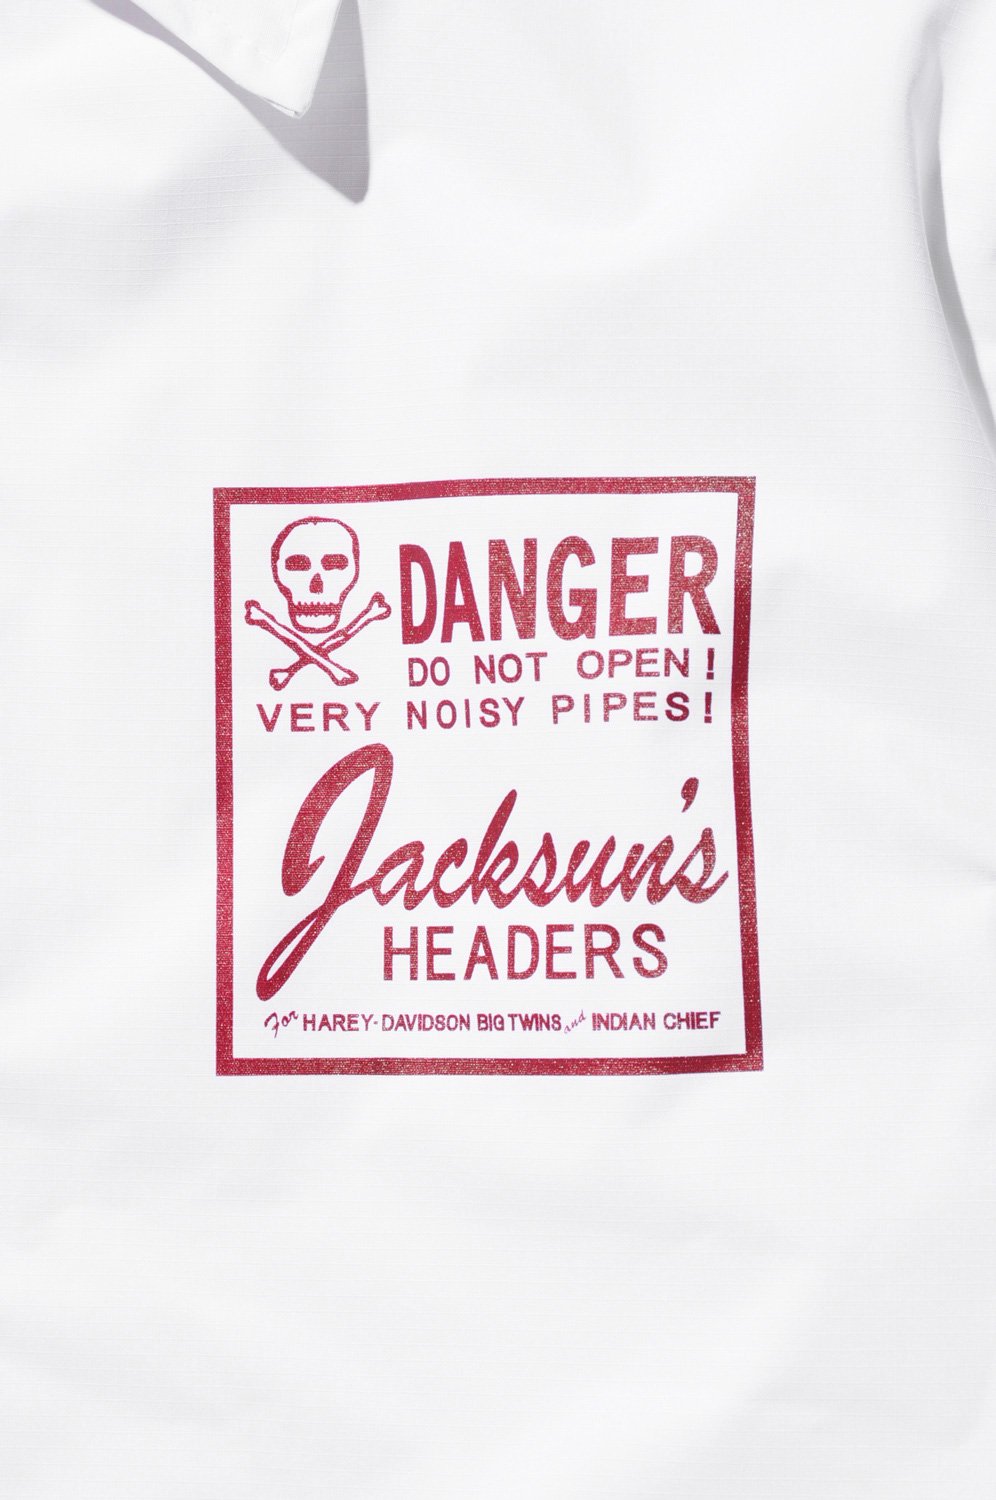 JACKSUN'S(ジャックサンズ) コーチジャケット JACKSUN'S HEADERS ...